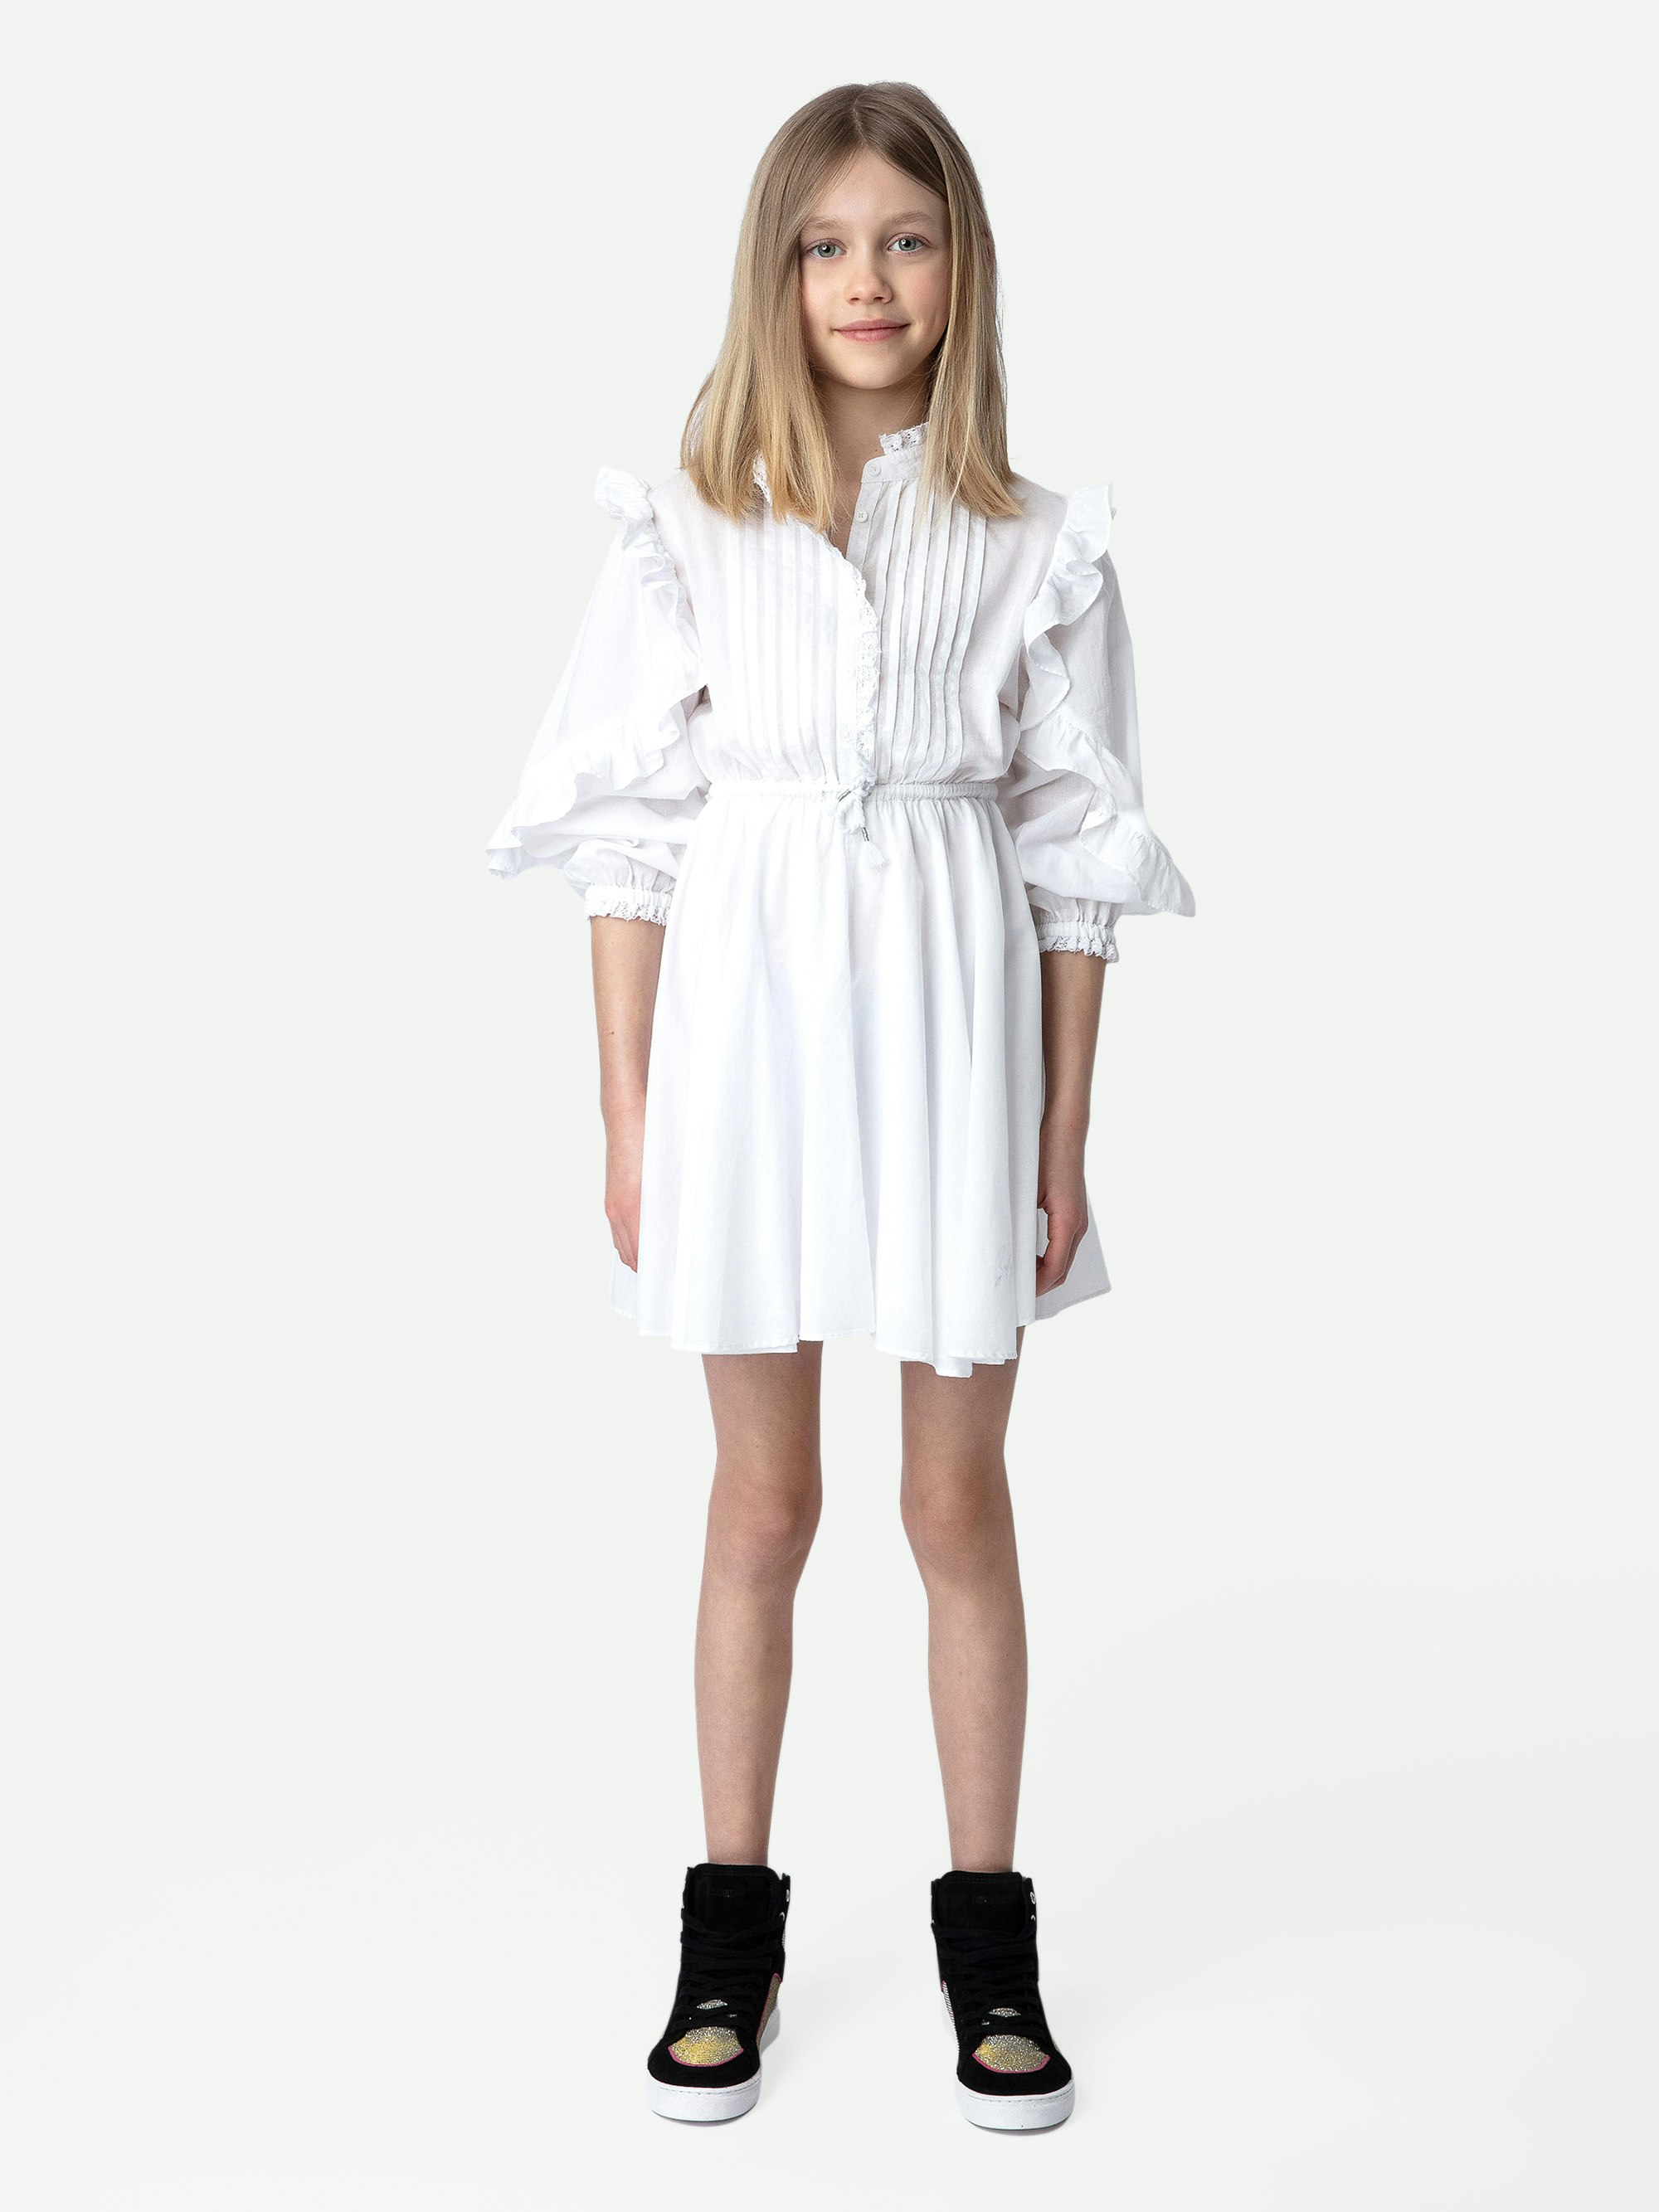 Ranil Girls’ Dress - Girls’ white cotton occasion dress with lace-embellished ruffled skirt.